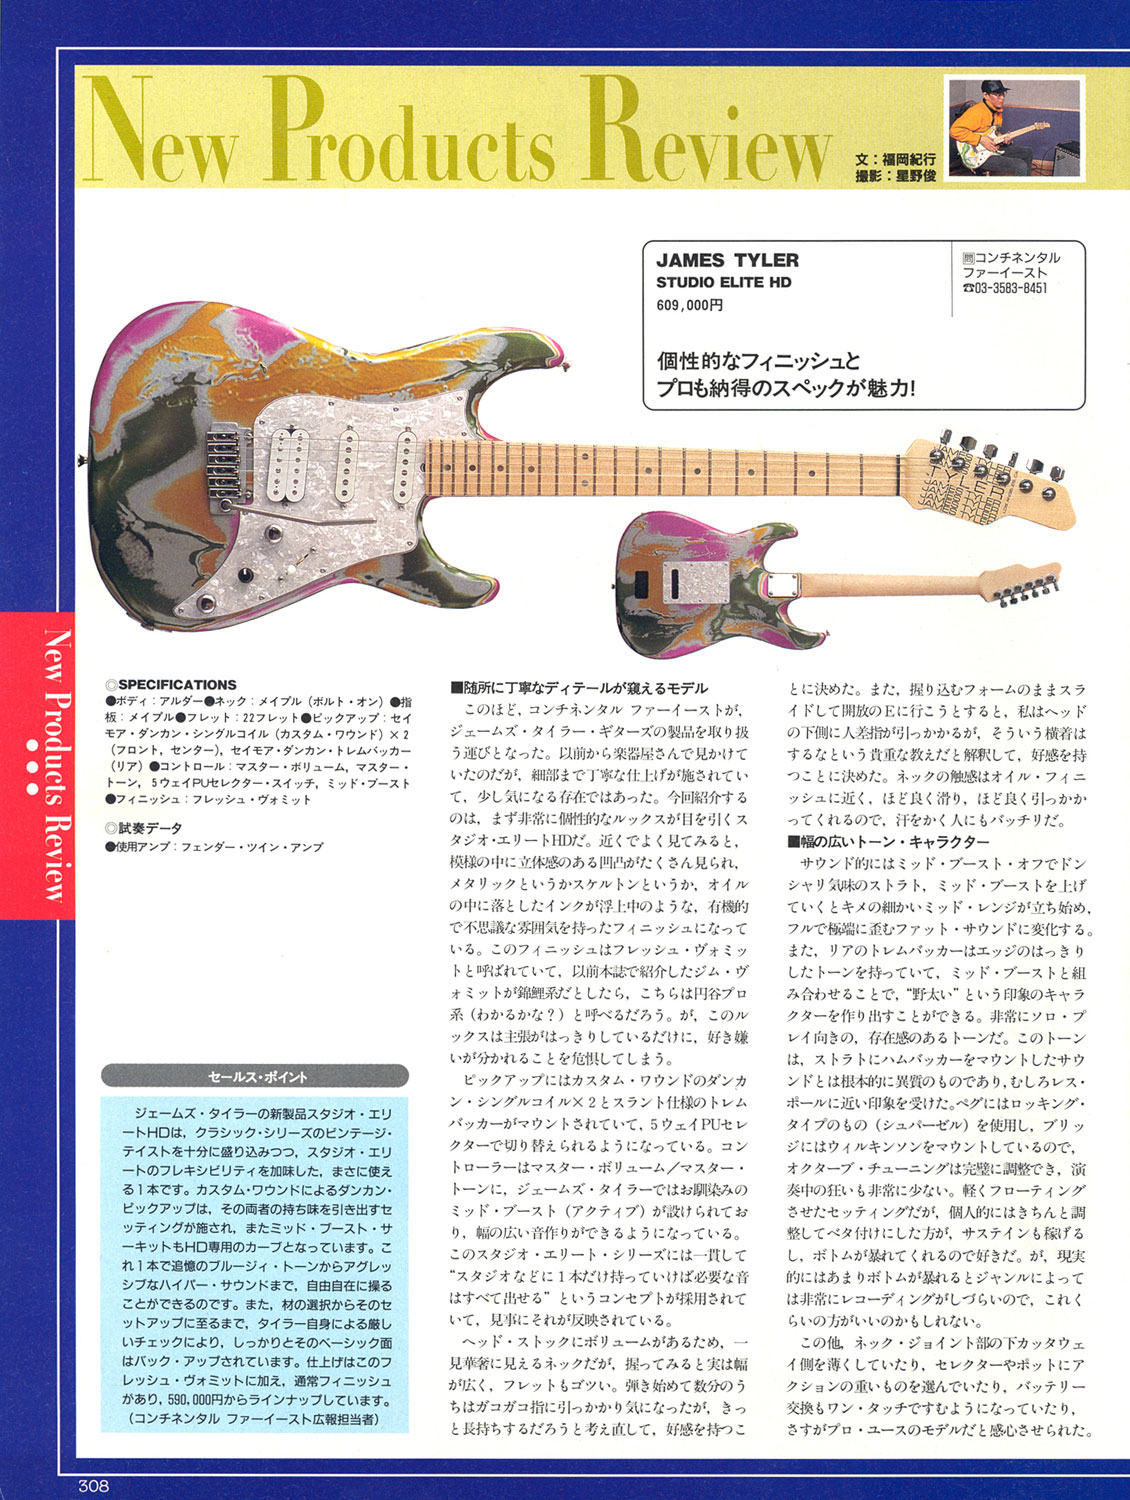 Copy of 1999 Guitar Magazine - Jan.